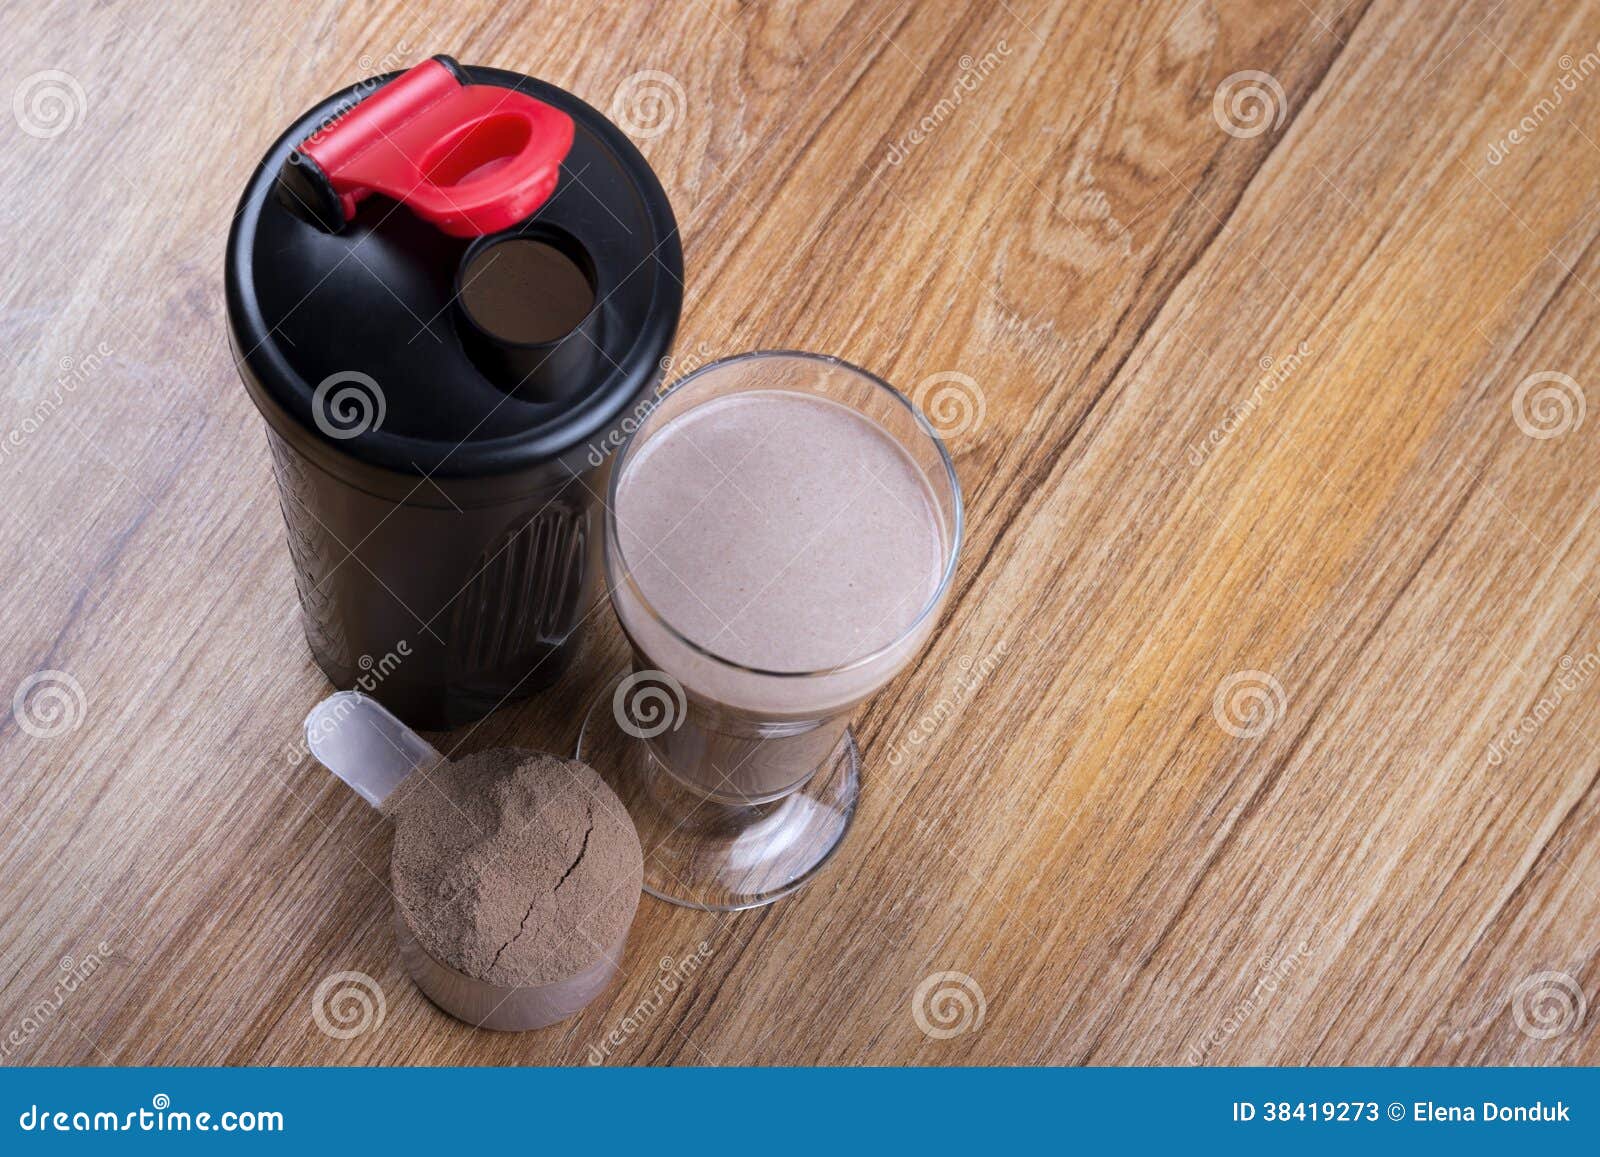 protein shake, shaker and round scoop